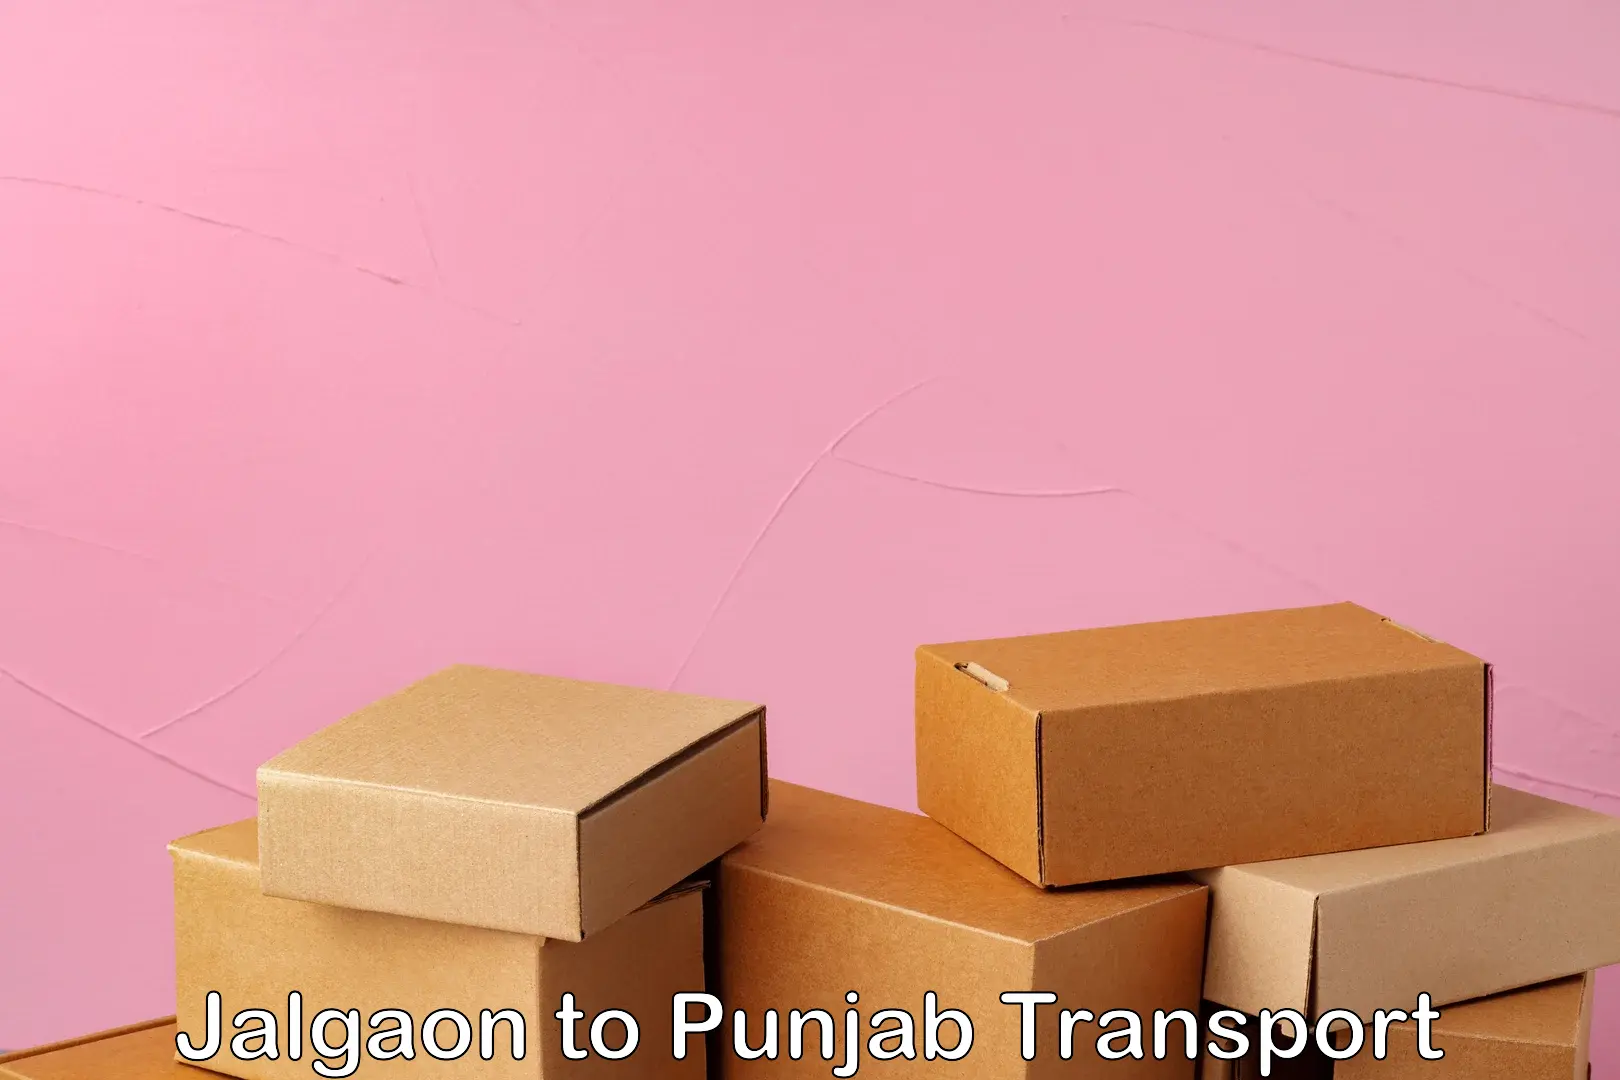 Truck transport companies in India Jalgaon to Punjab